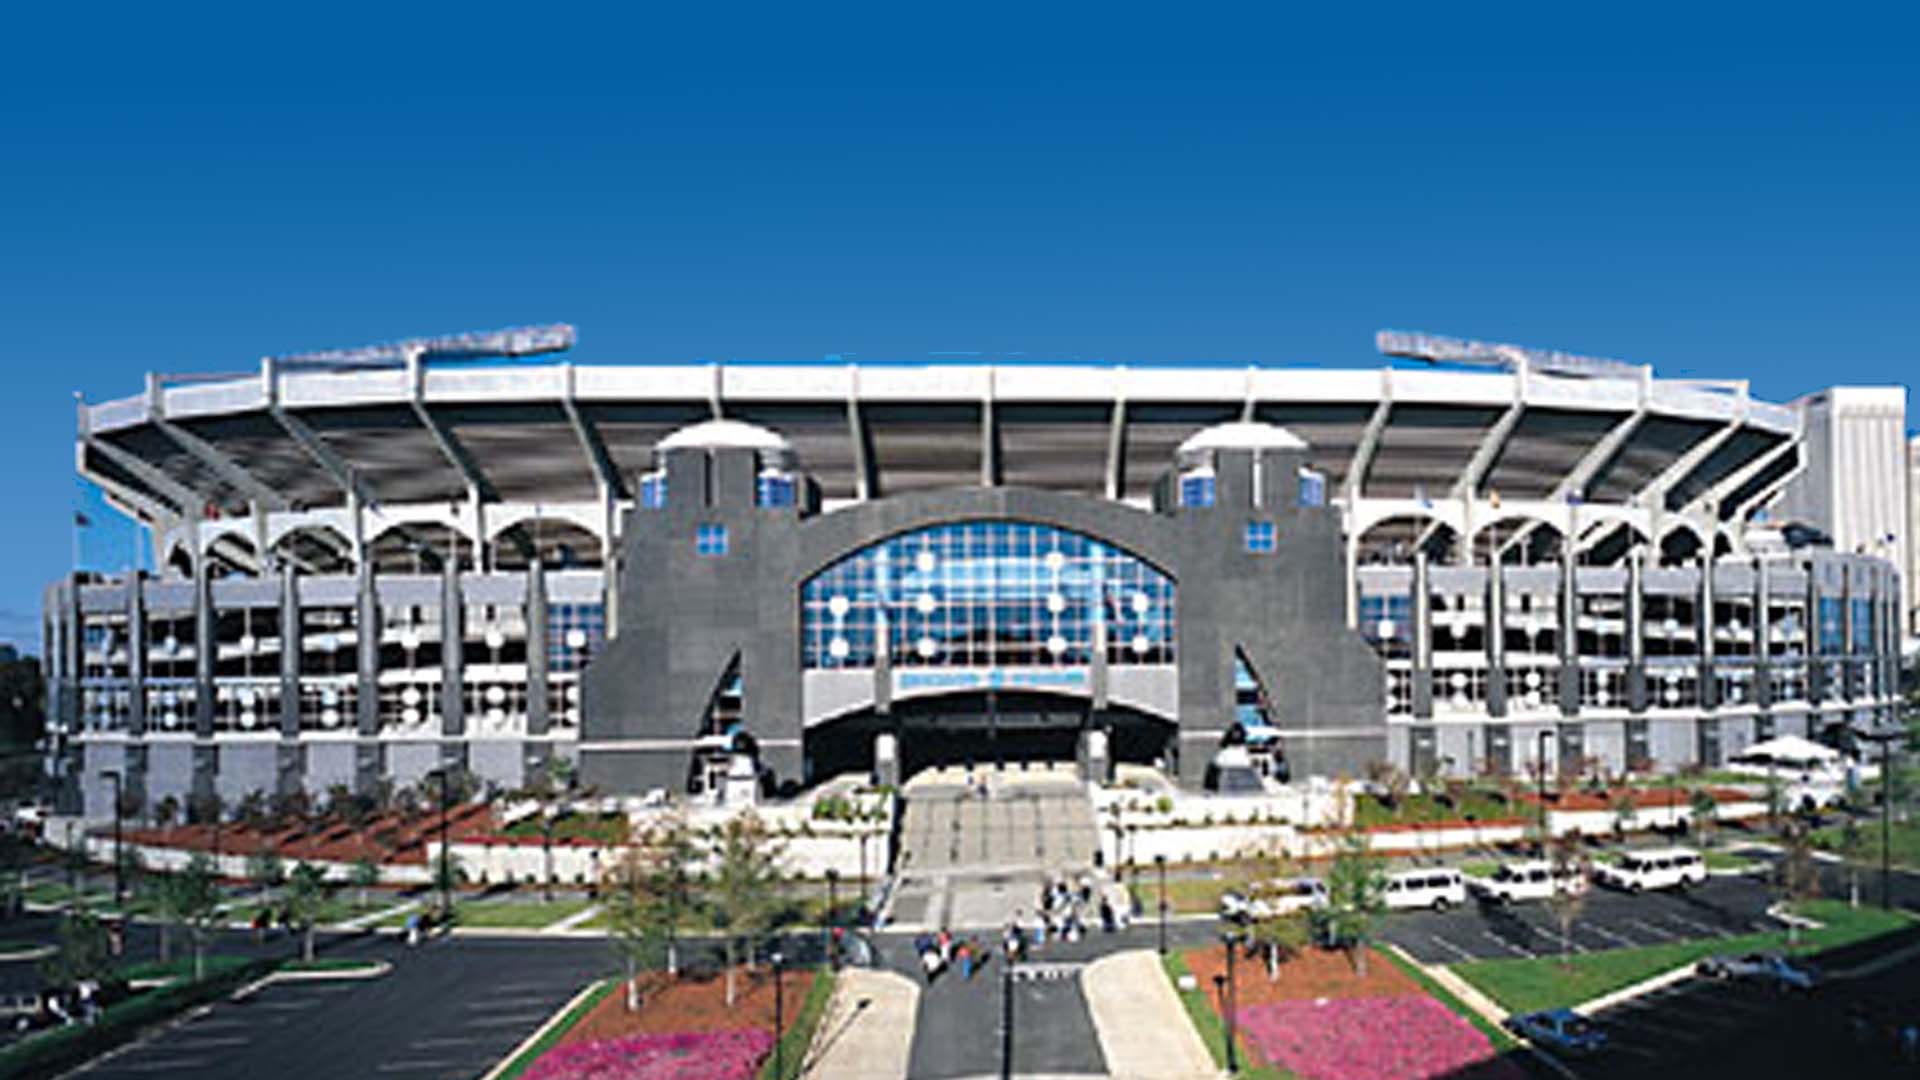 Carolina Panthers Stadium Renovation